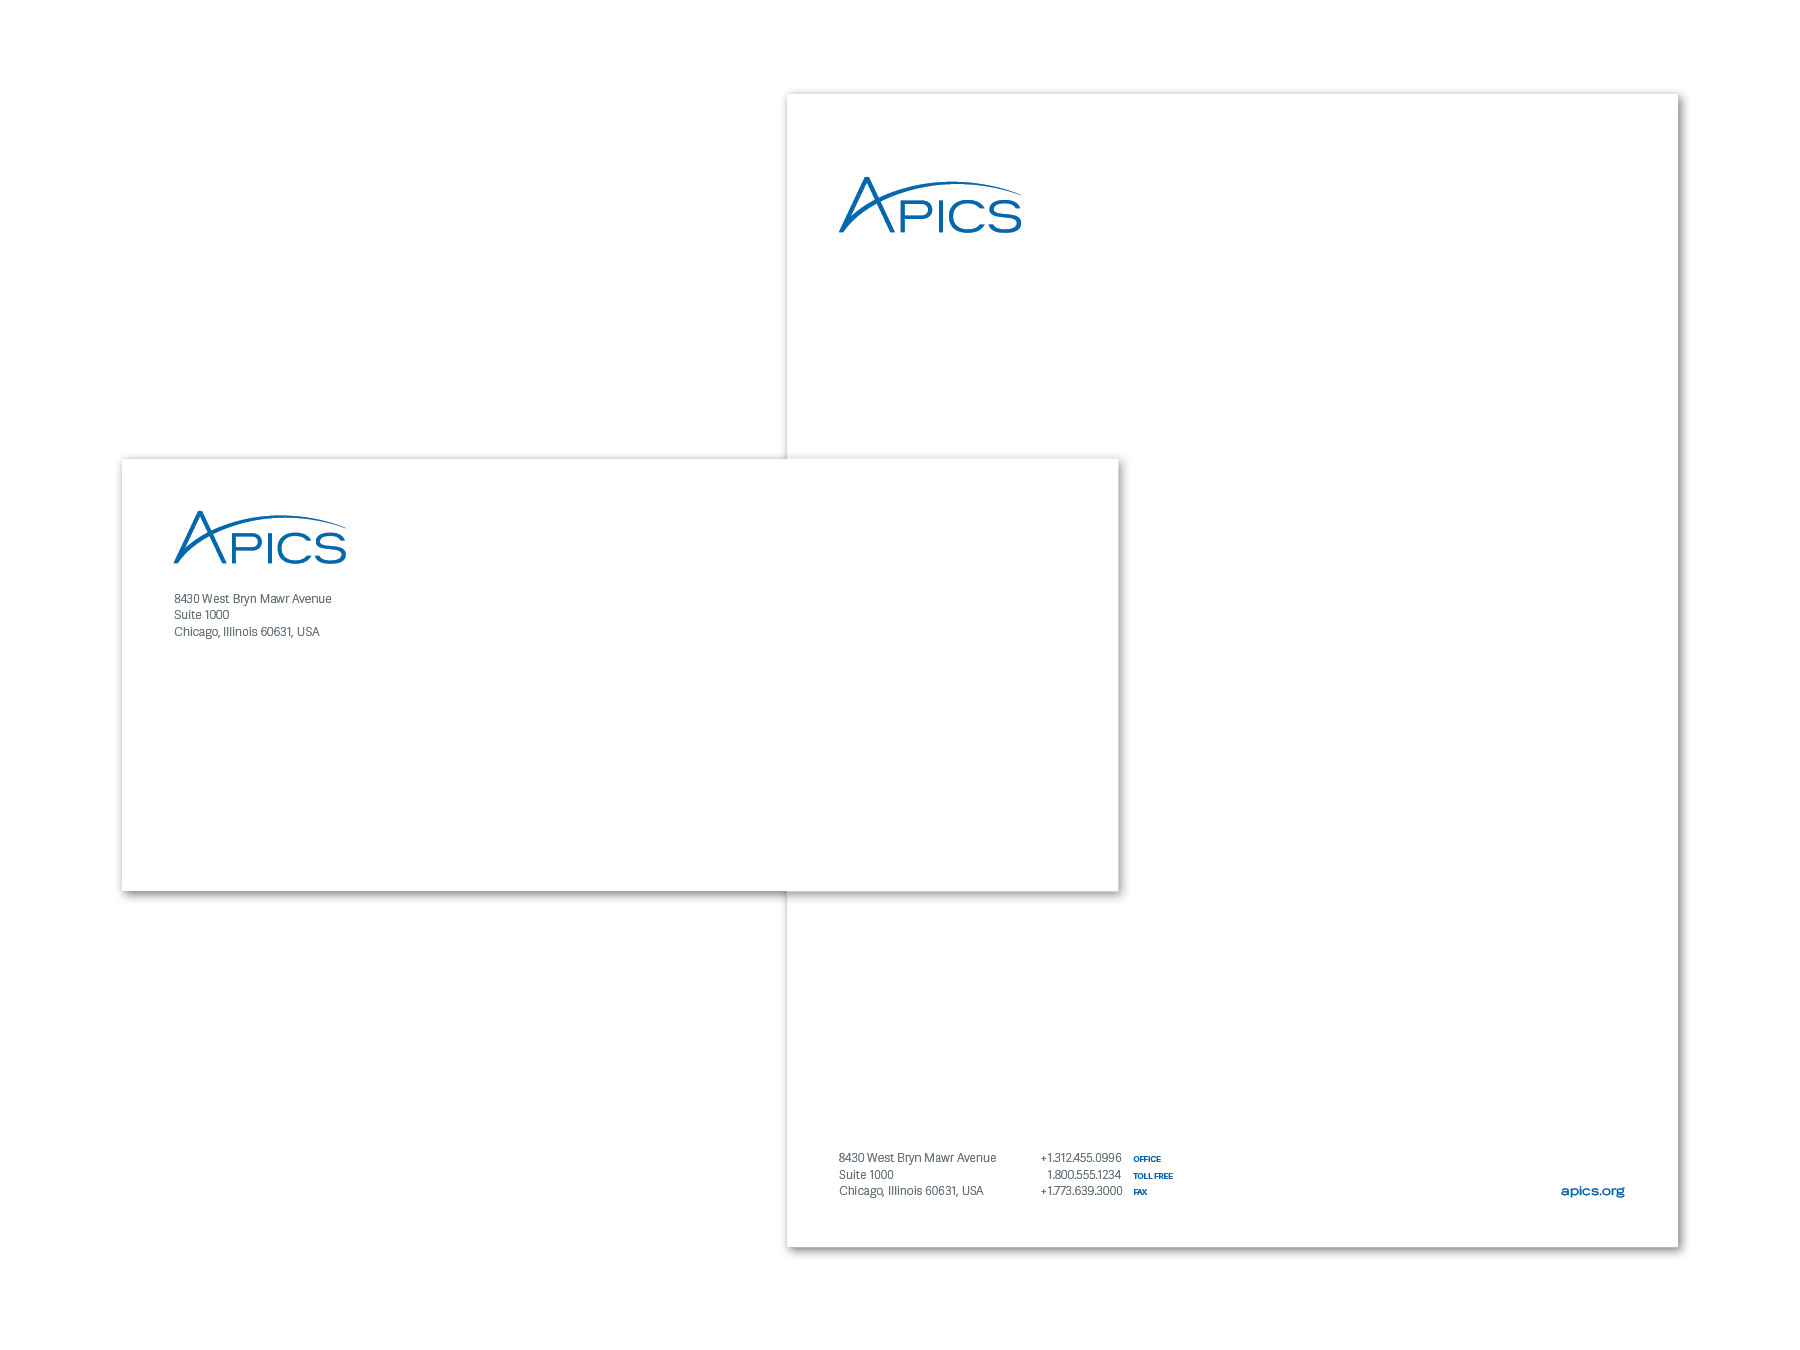  Rebranded APICS envelope and letterhead. 